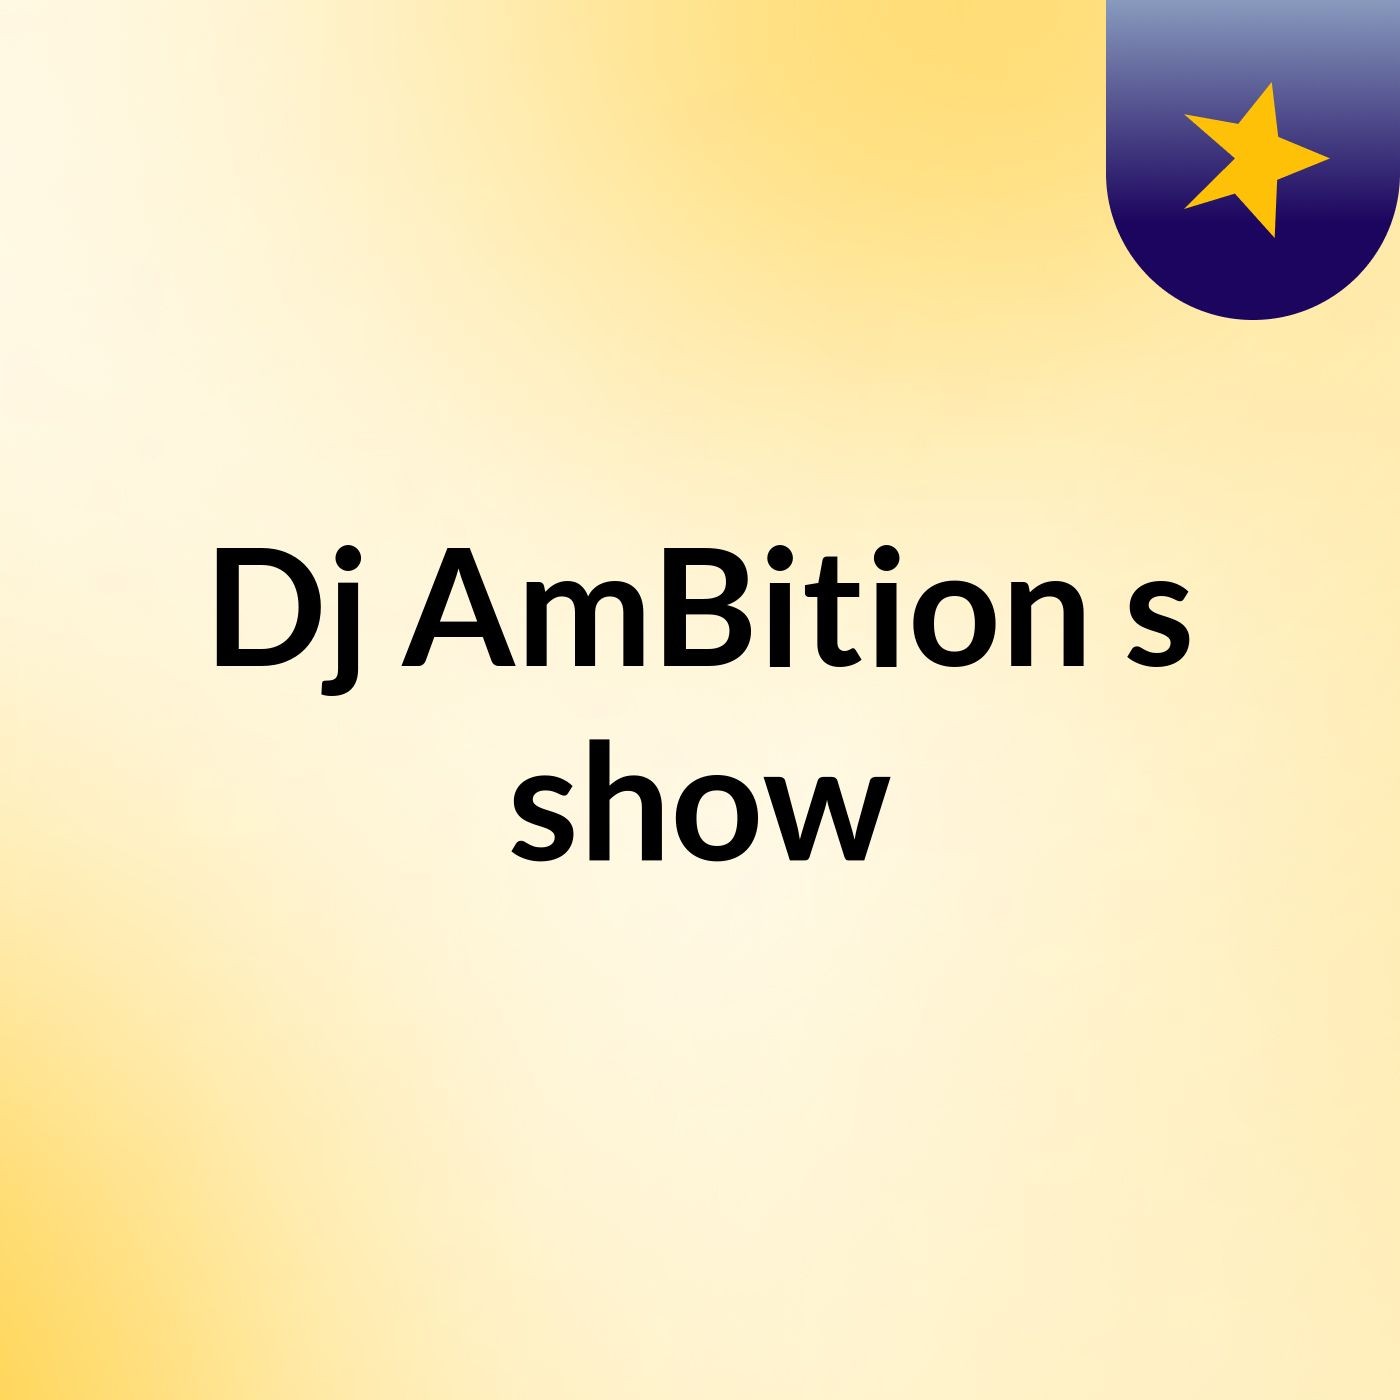 Dj AmBition's show